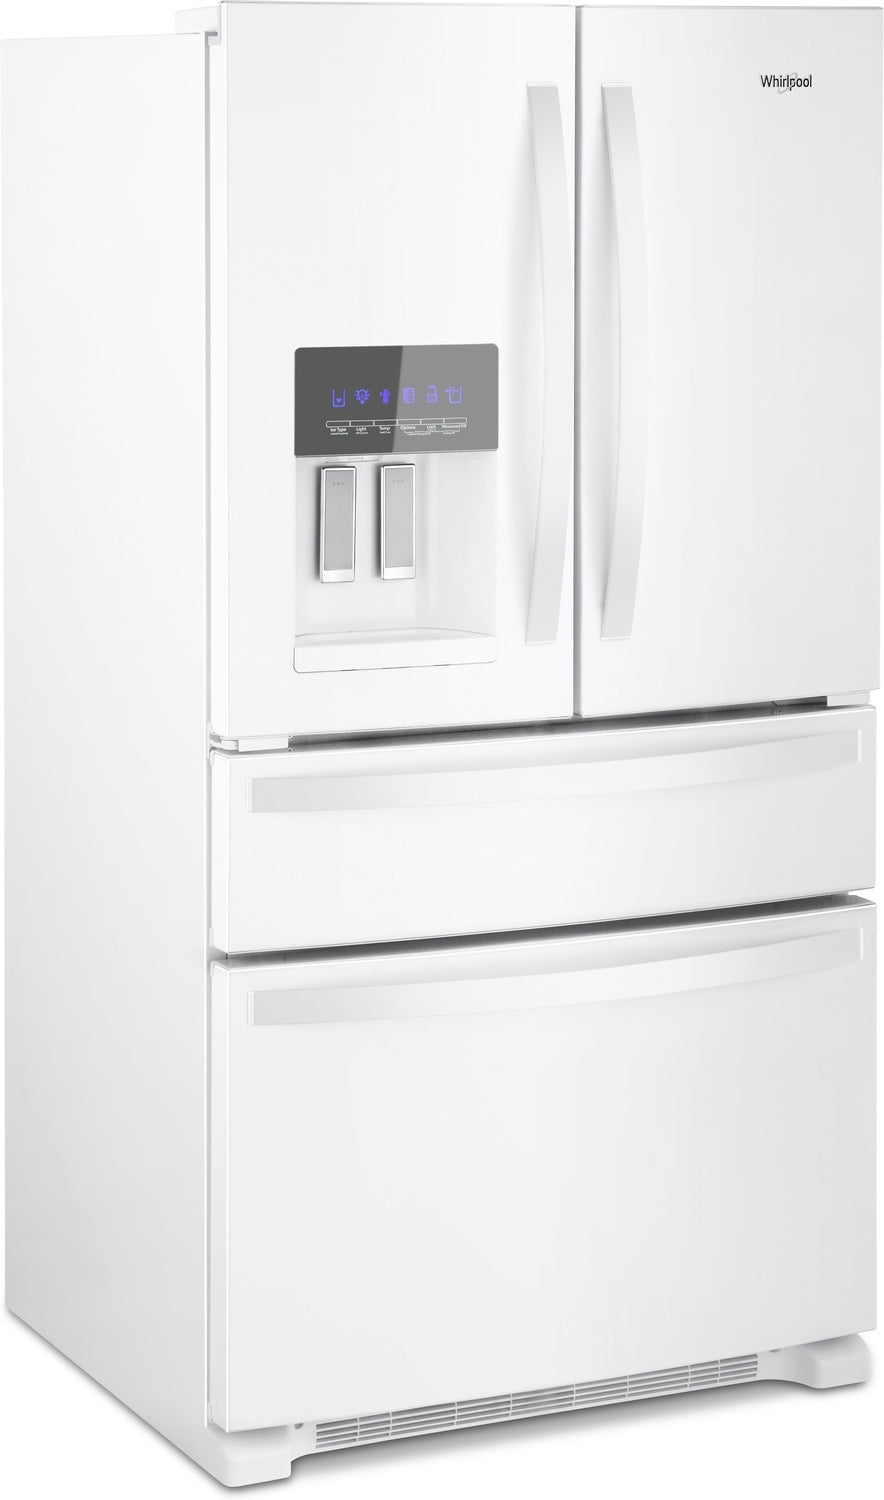 Whirlpool White French Door Refrigerator (25 Cu. Ft.) - WRX735SDHW